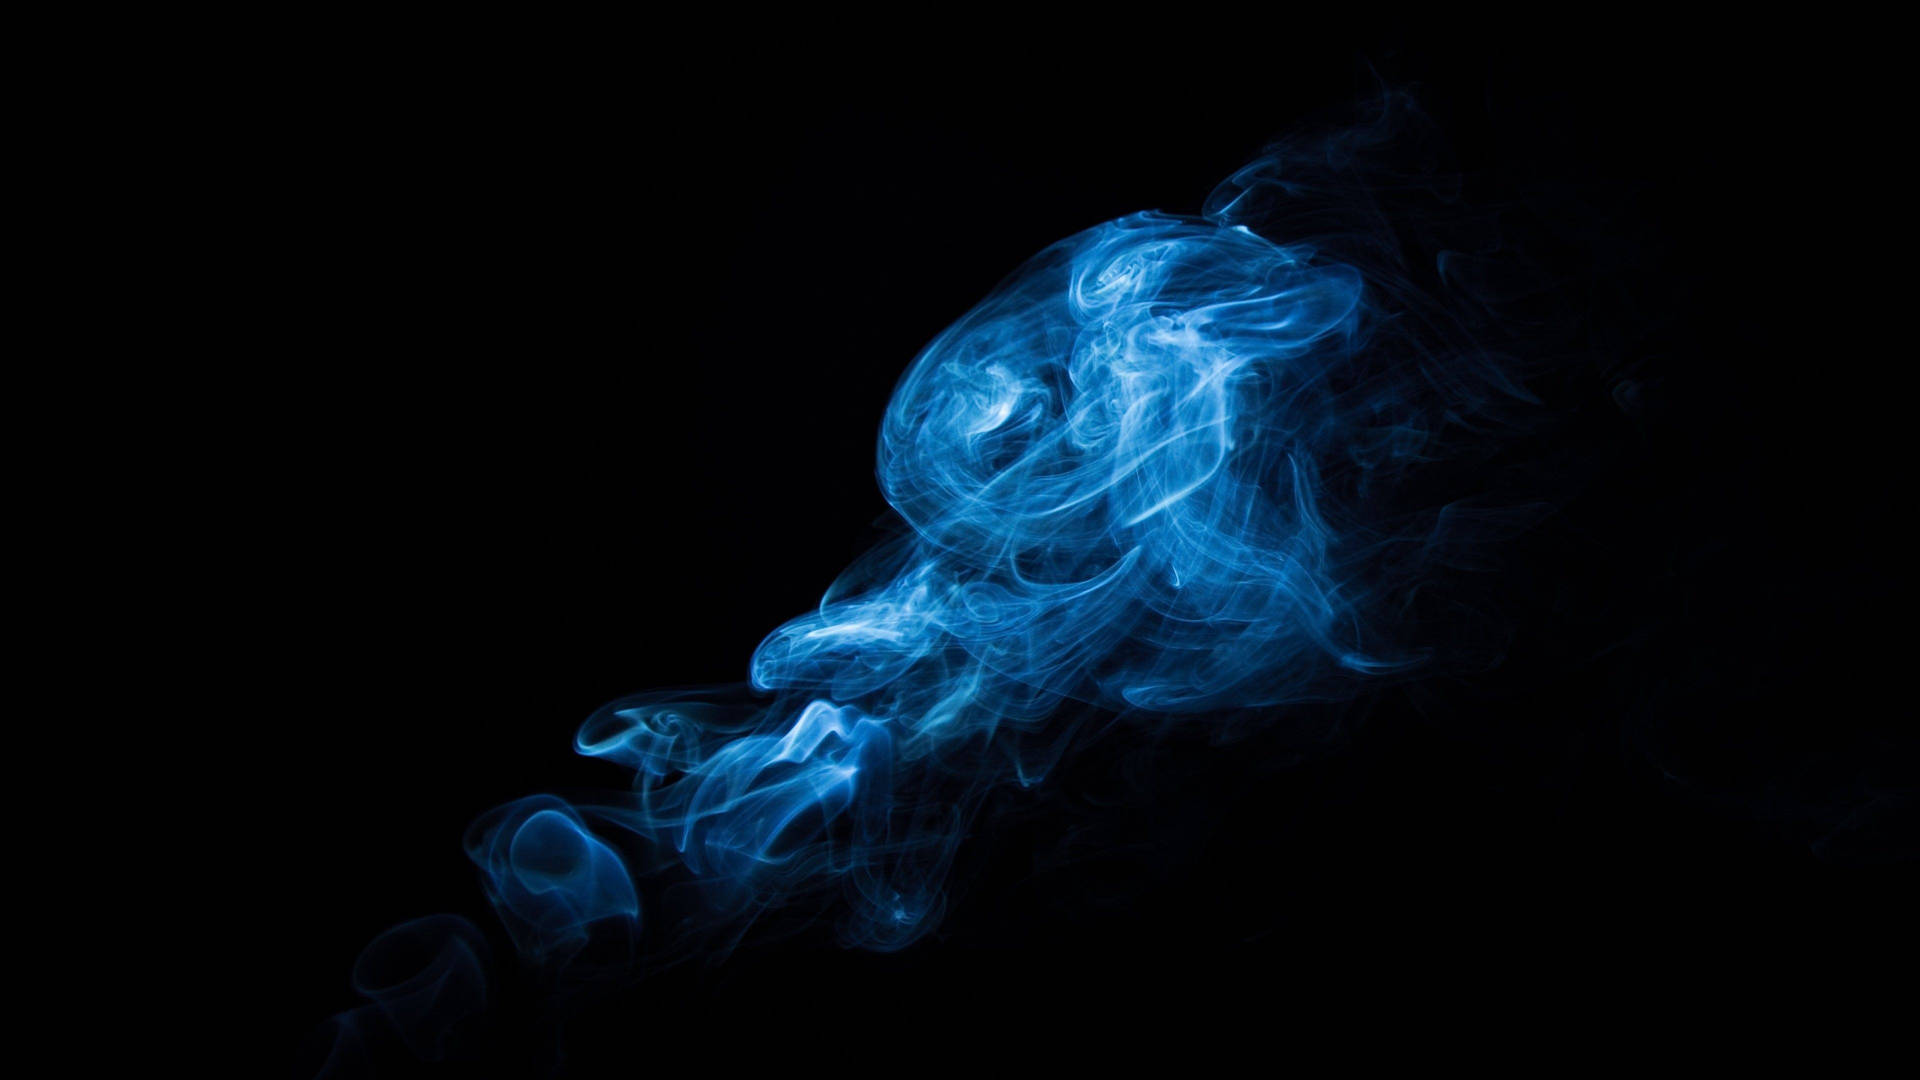 Caption: Majestic Blue Smoke with Striking White Streaks Wallpaper